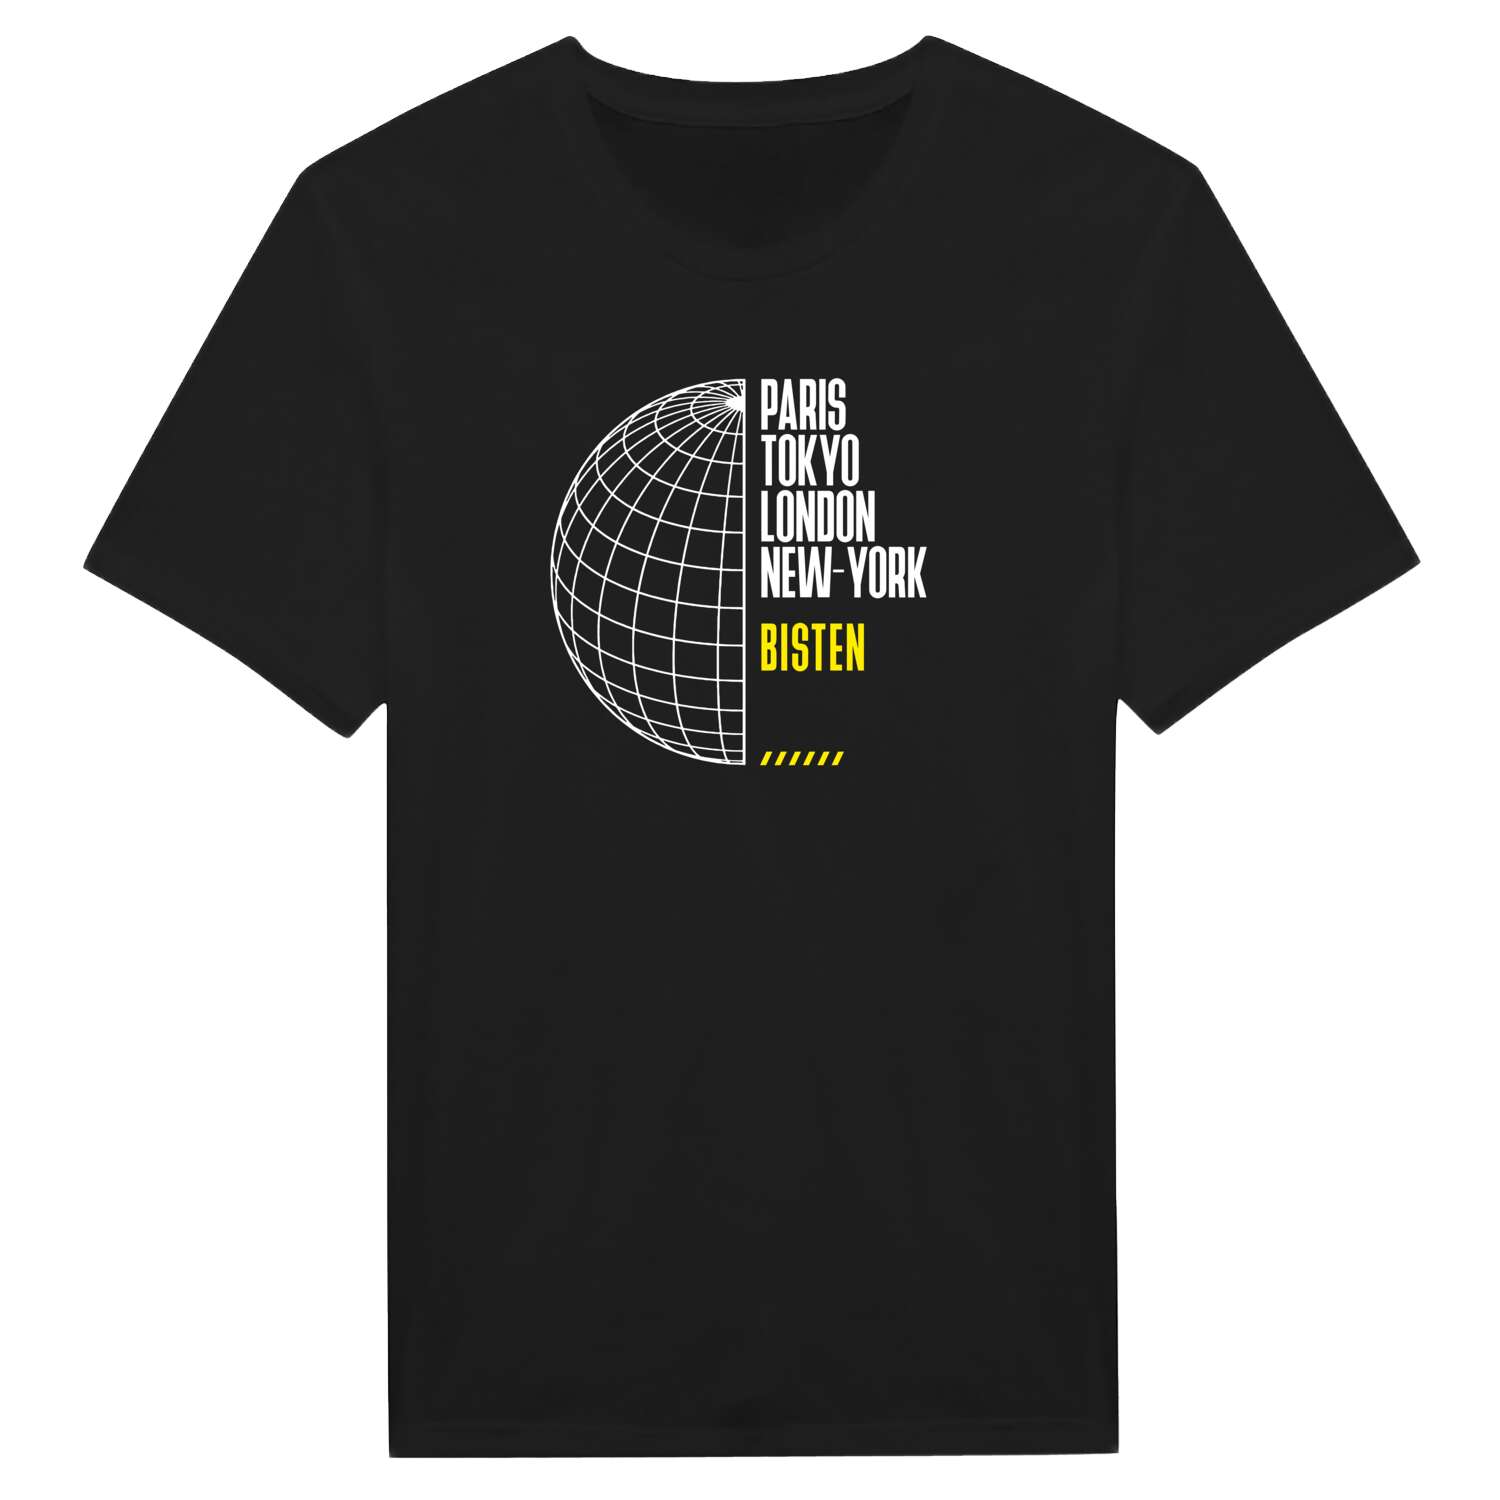 Bisten T-Shirt »Paris Tokyo London«